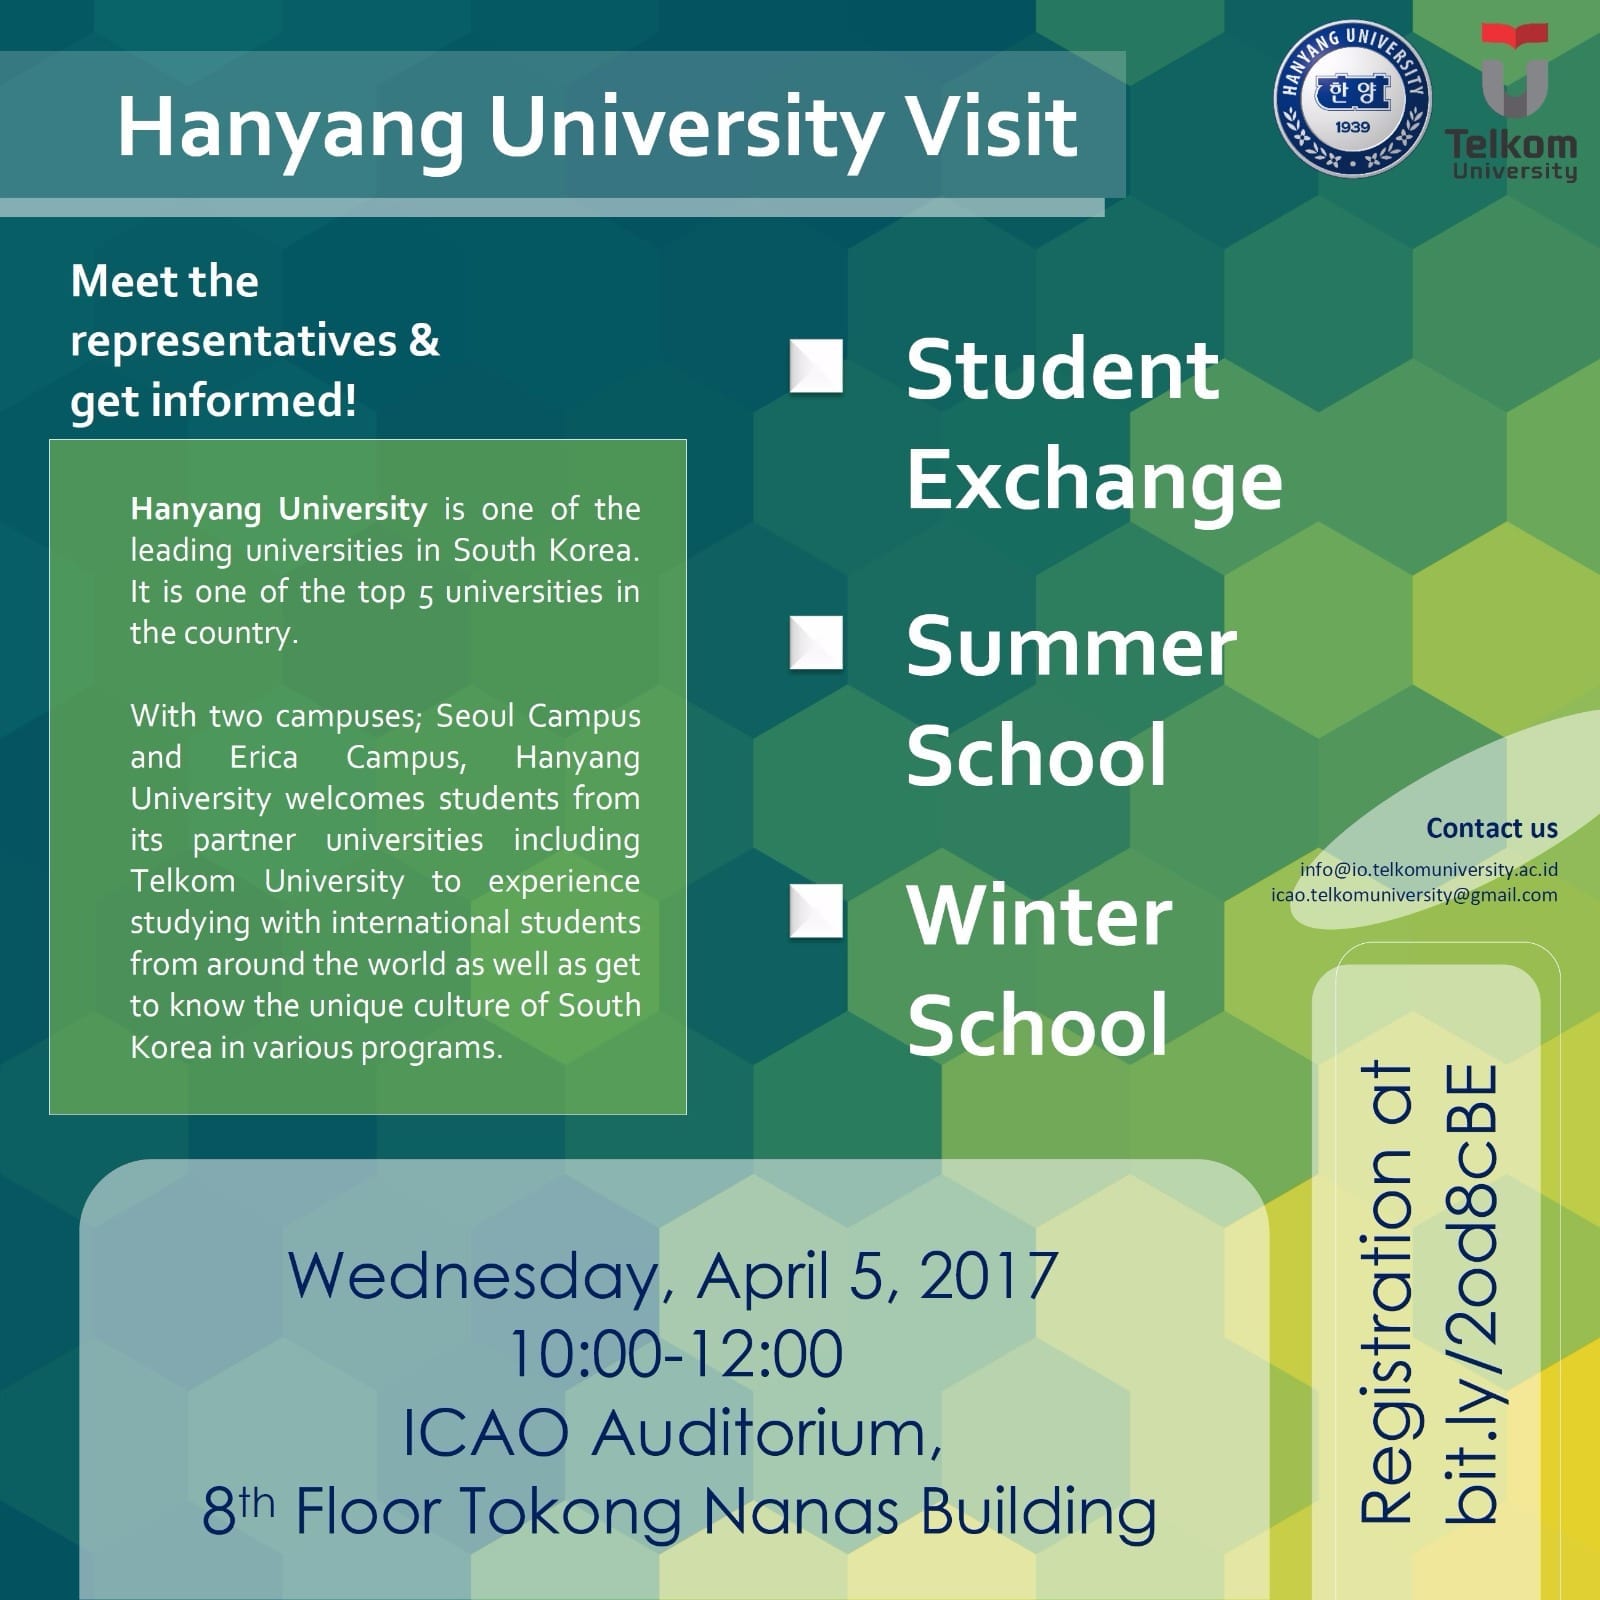 Hanyang University Visit